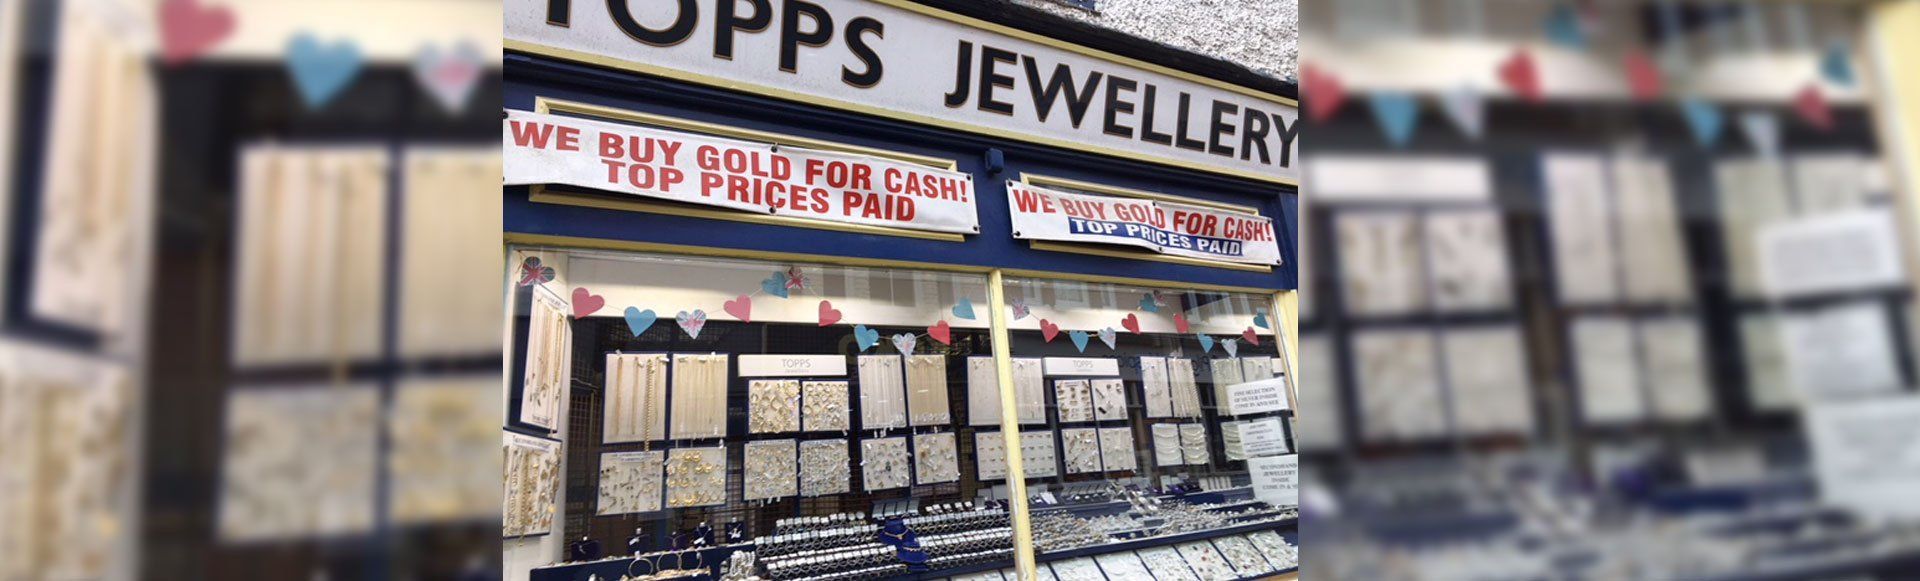 Topps Jewellery store